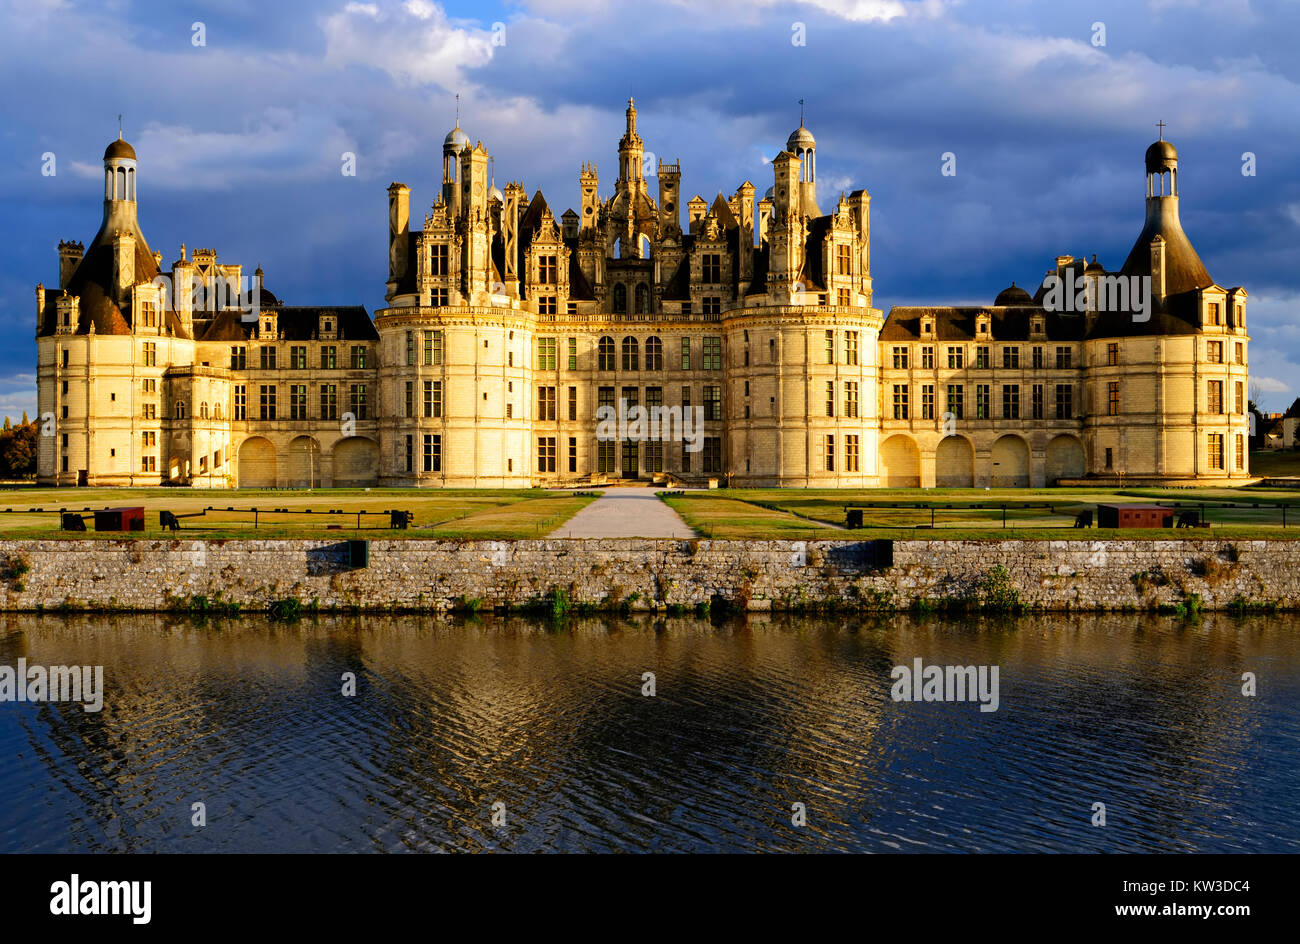 Chateau de Chambord - Castle of Chambord, Loire Valley, France Stock Photo